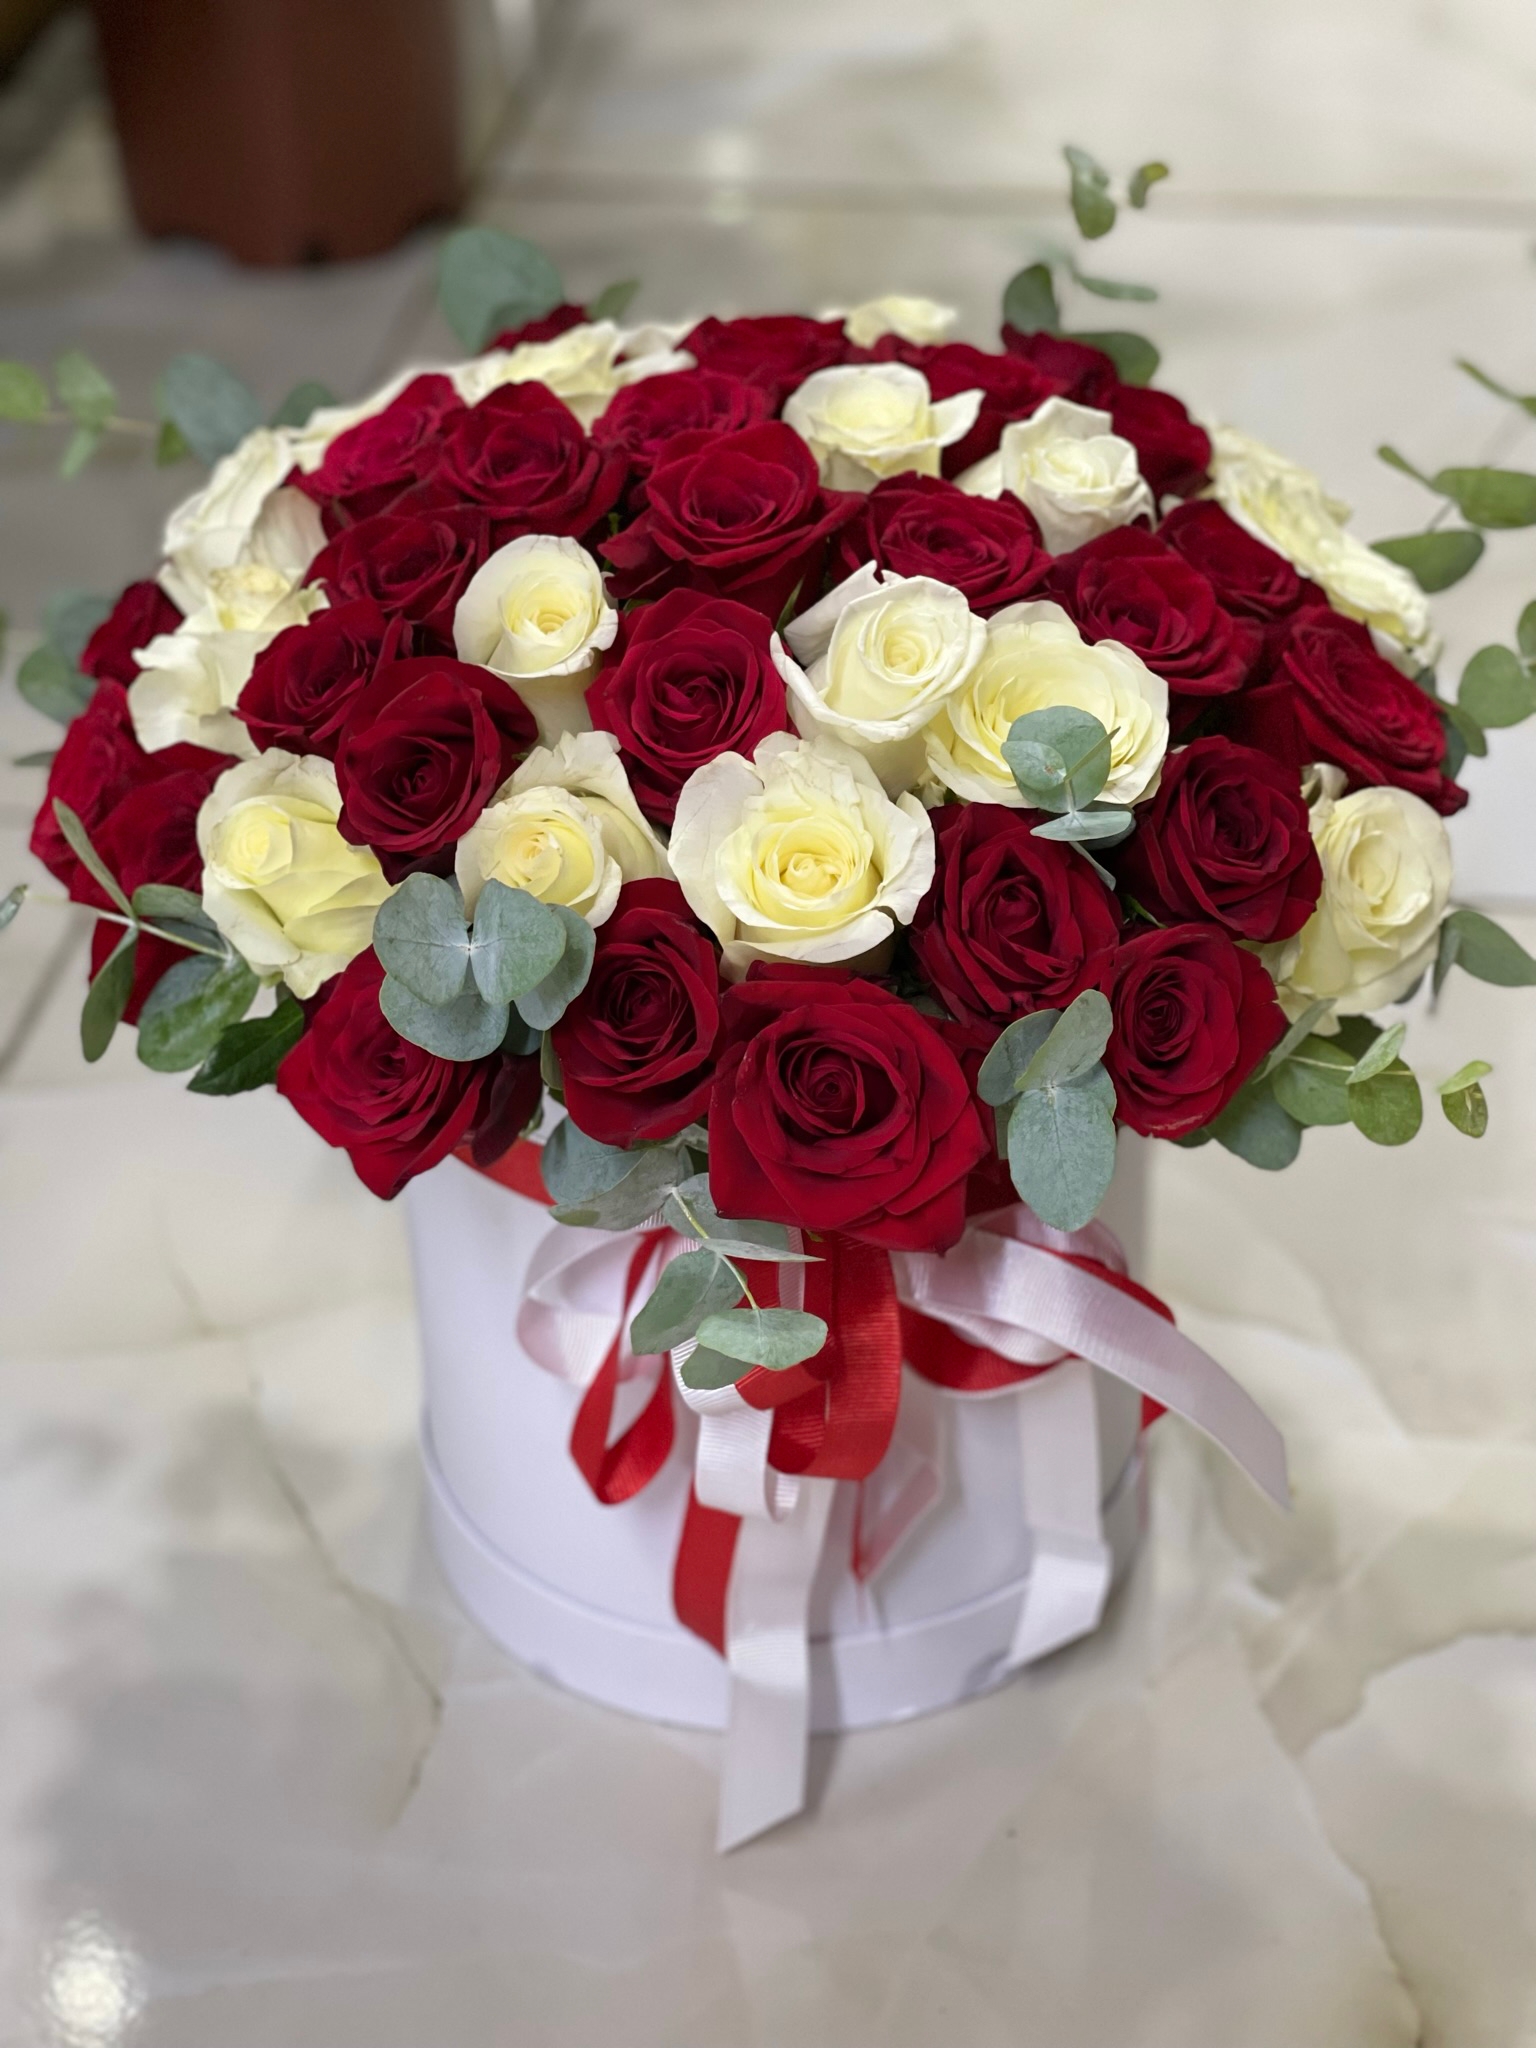 antalya kemer florist 51 Pcs Imported White & Red Roses  